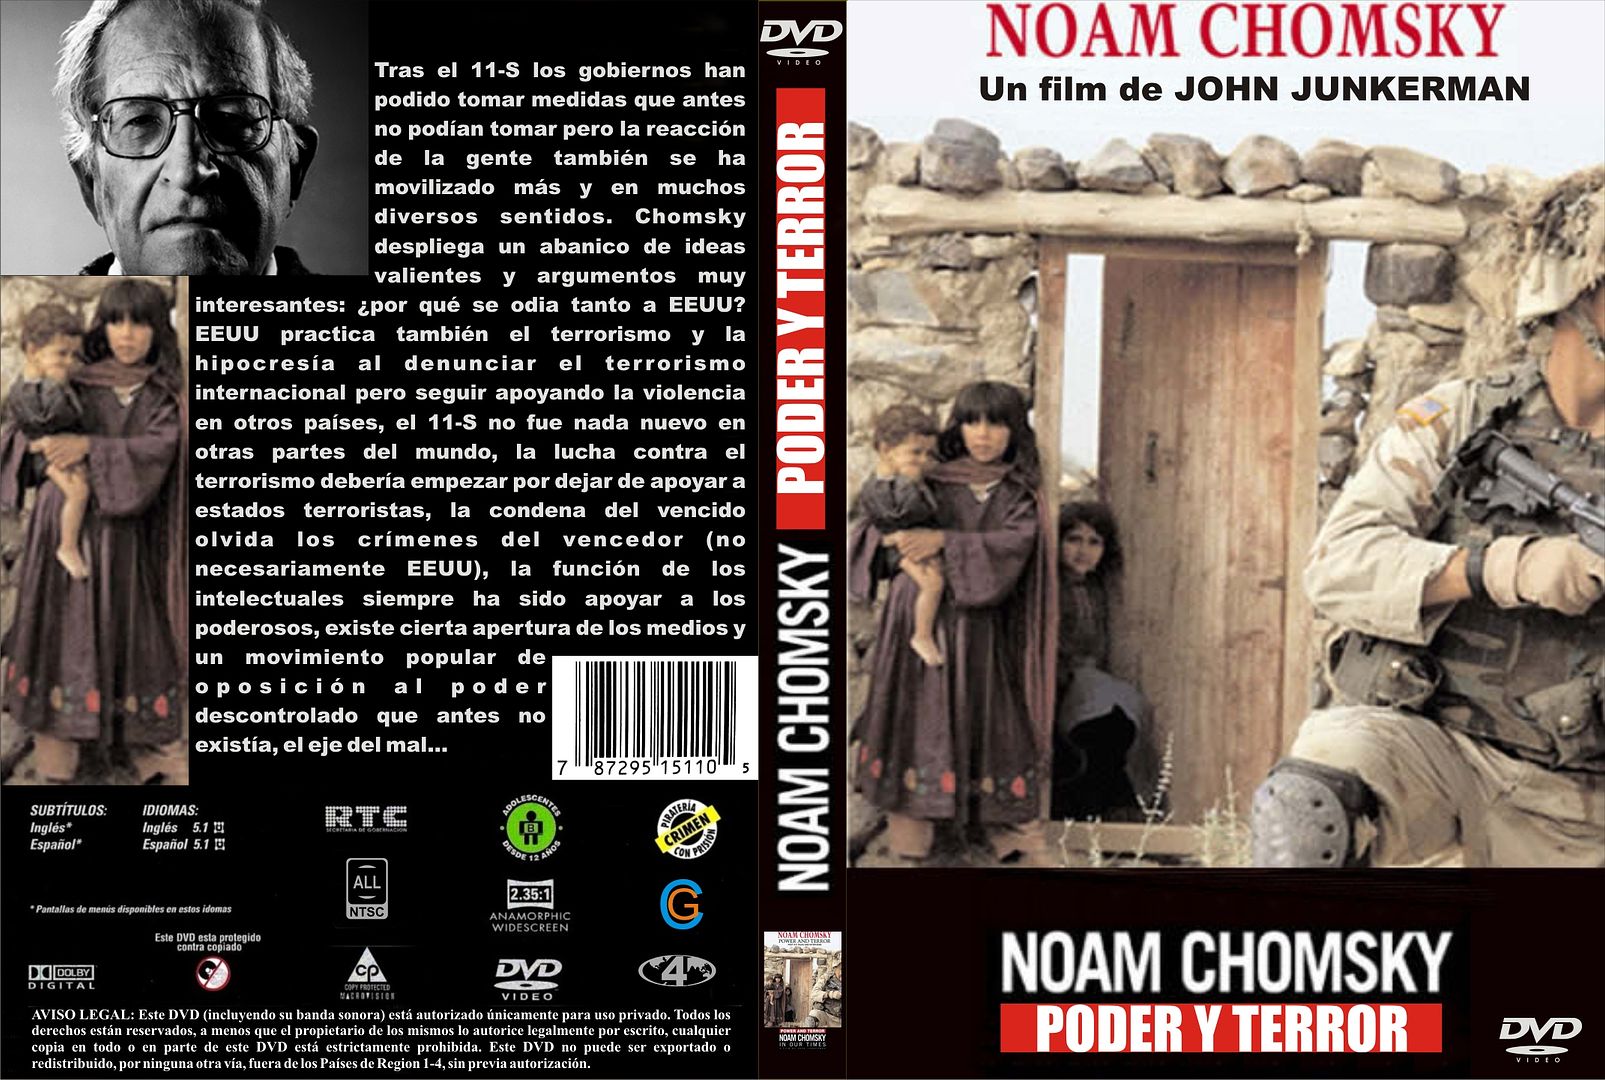 Noam20Chomsky20Poder20Y20Terror20 20Region20420 20dvd por20jovihi - Poder y terror (Noam Chomsky) Dvdrip VOSE